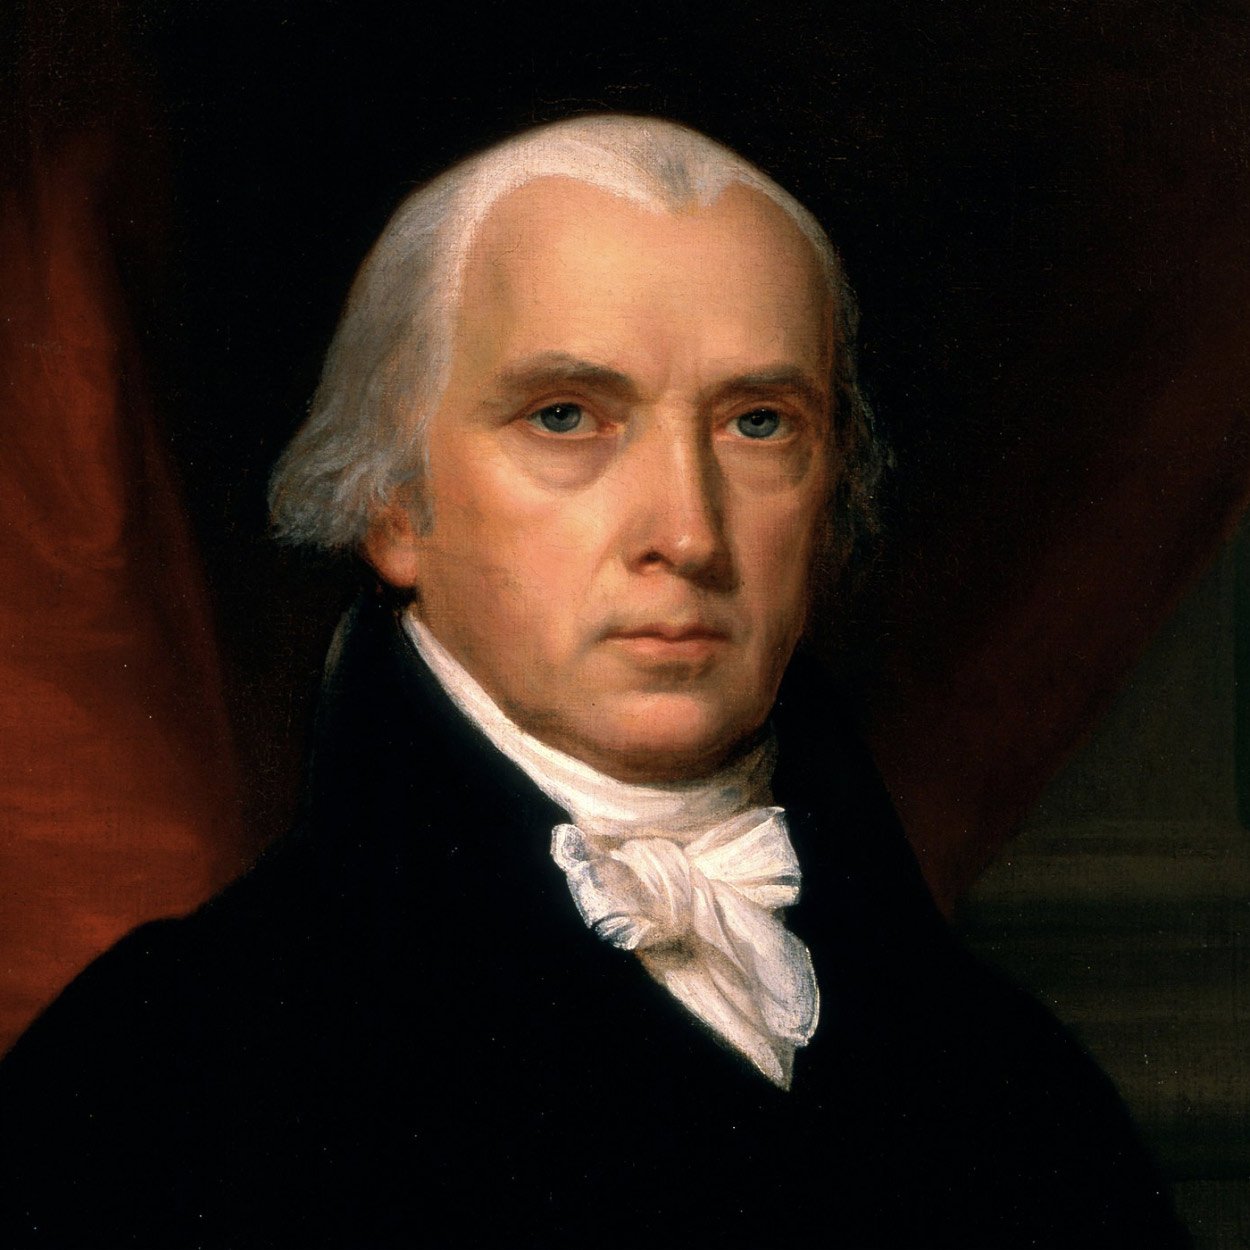 The Portrait of James Madison